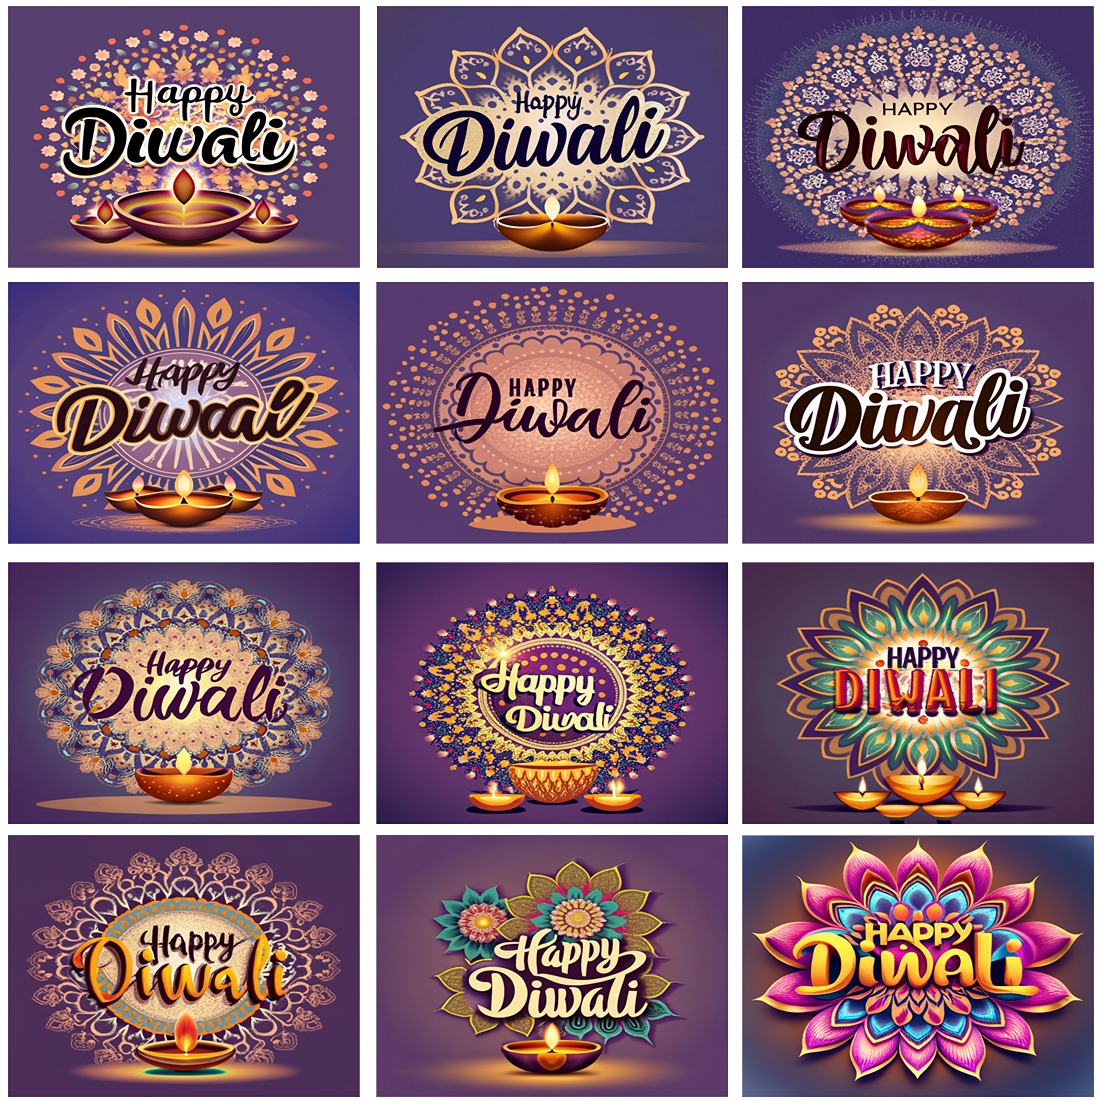 Diwali Offer